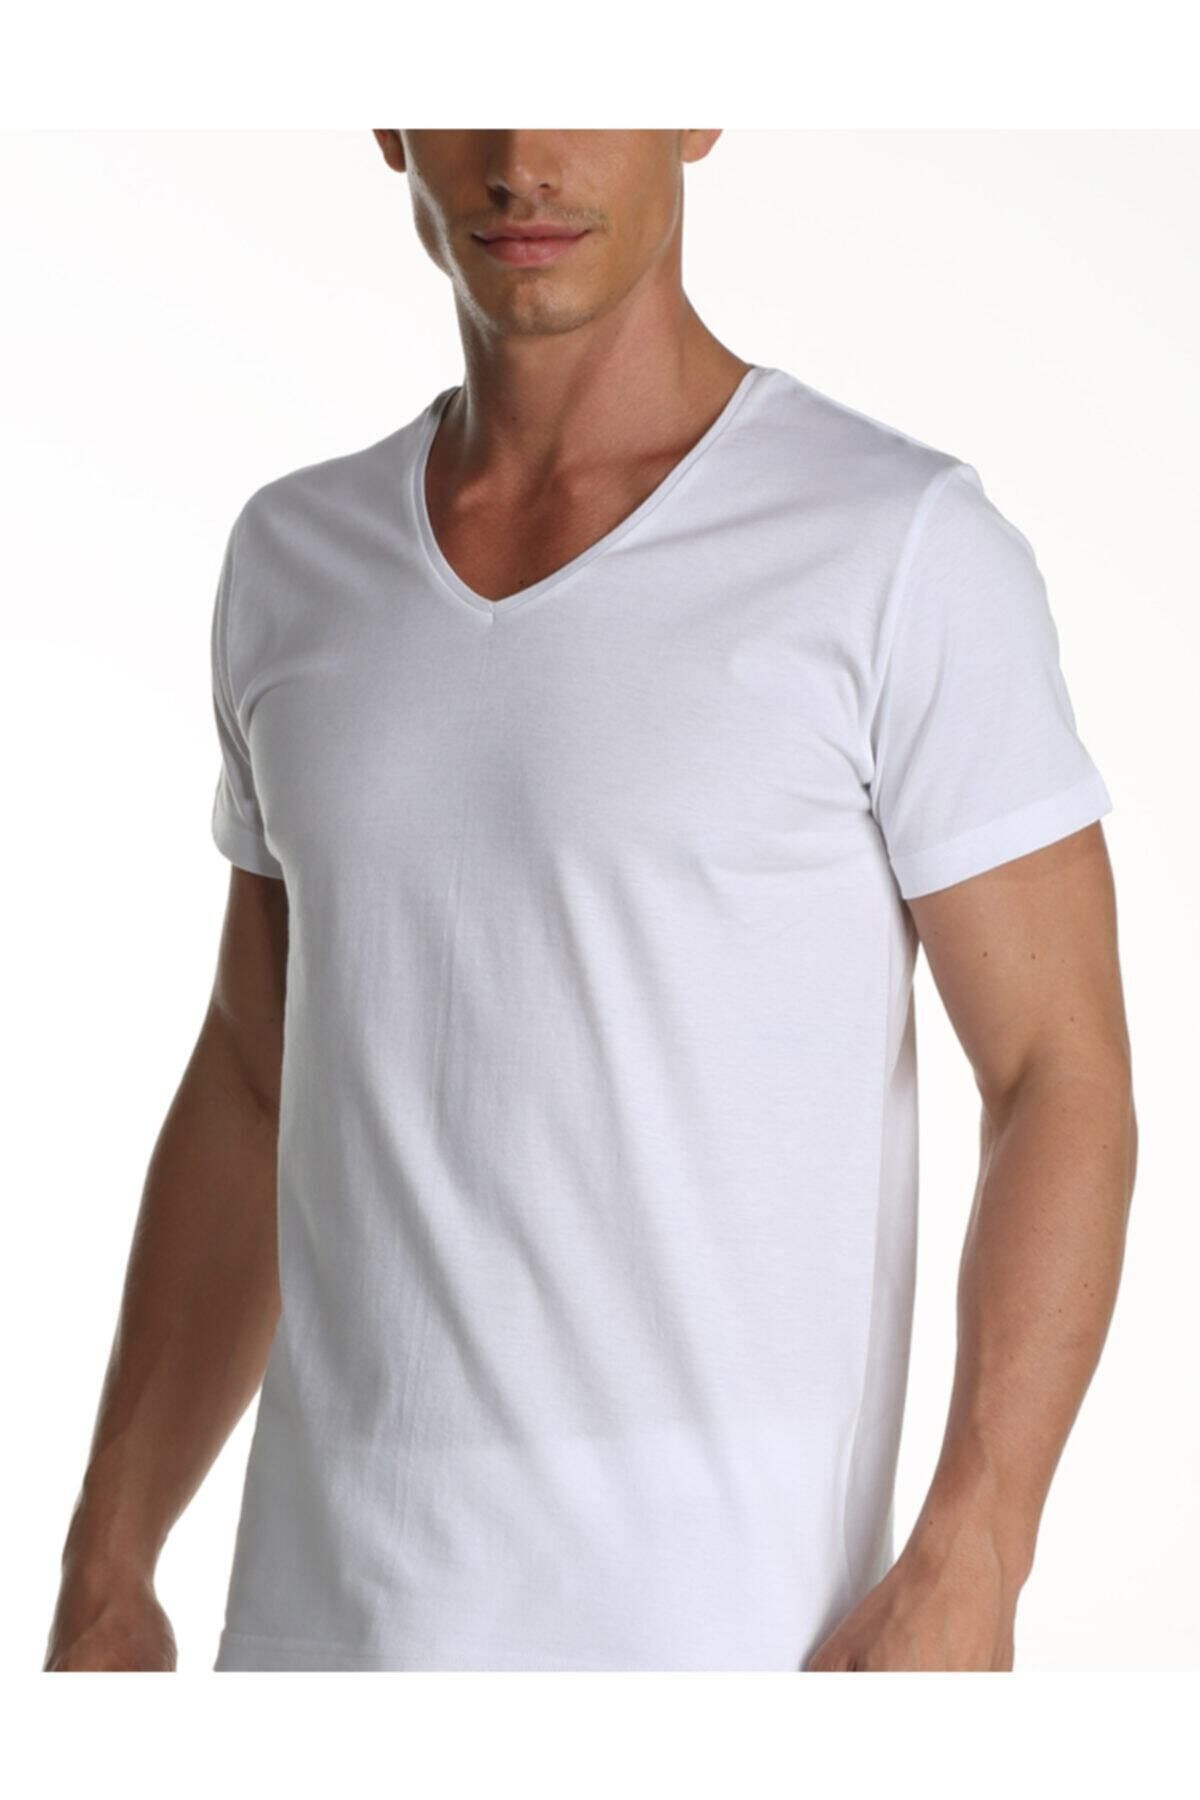 Çift Kaplan Erkek Beyaz 3'lü Süprem V Yaka T-shirt Fanila 952